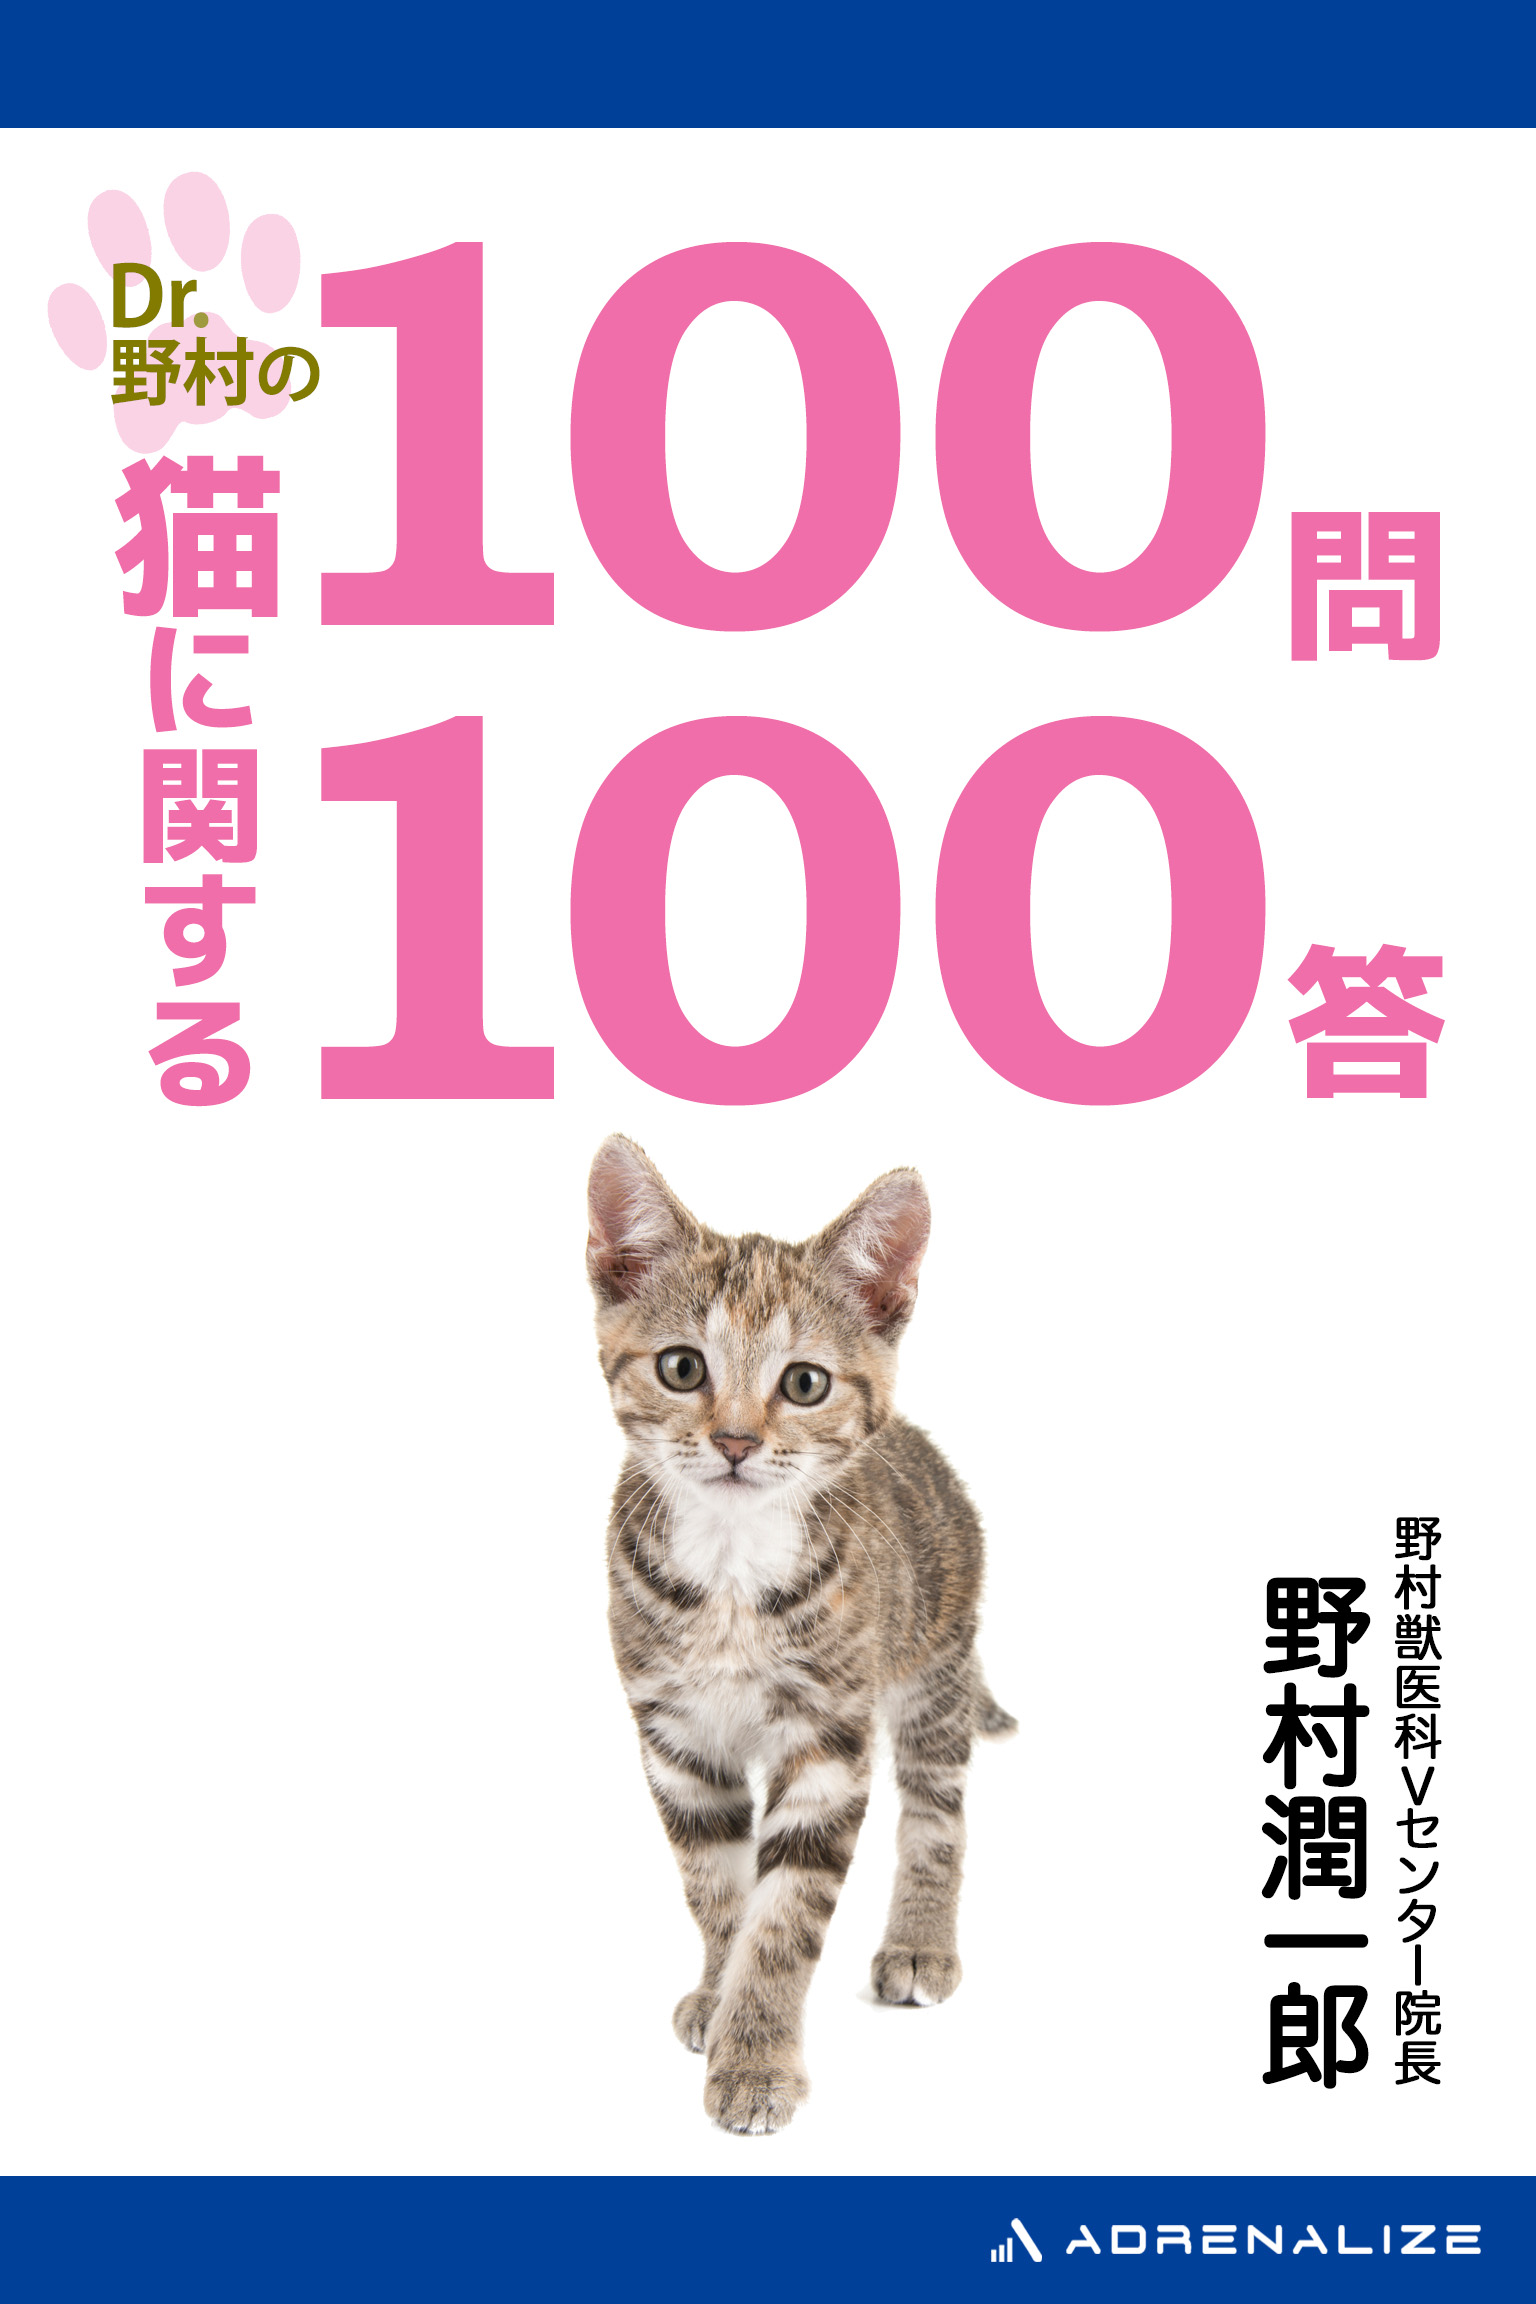 Dr.野村の猫に関する100問100答 - 野村潤一郎 - ビジネス・実用書・無料試し読みなら、電子書籍・コミックストア ブックライブ